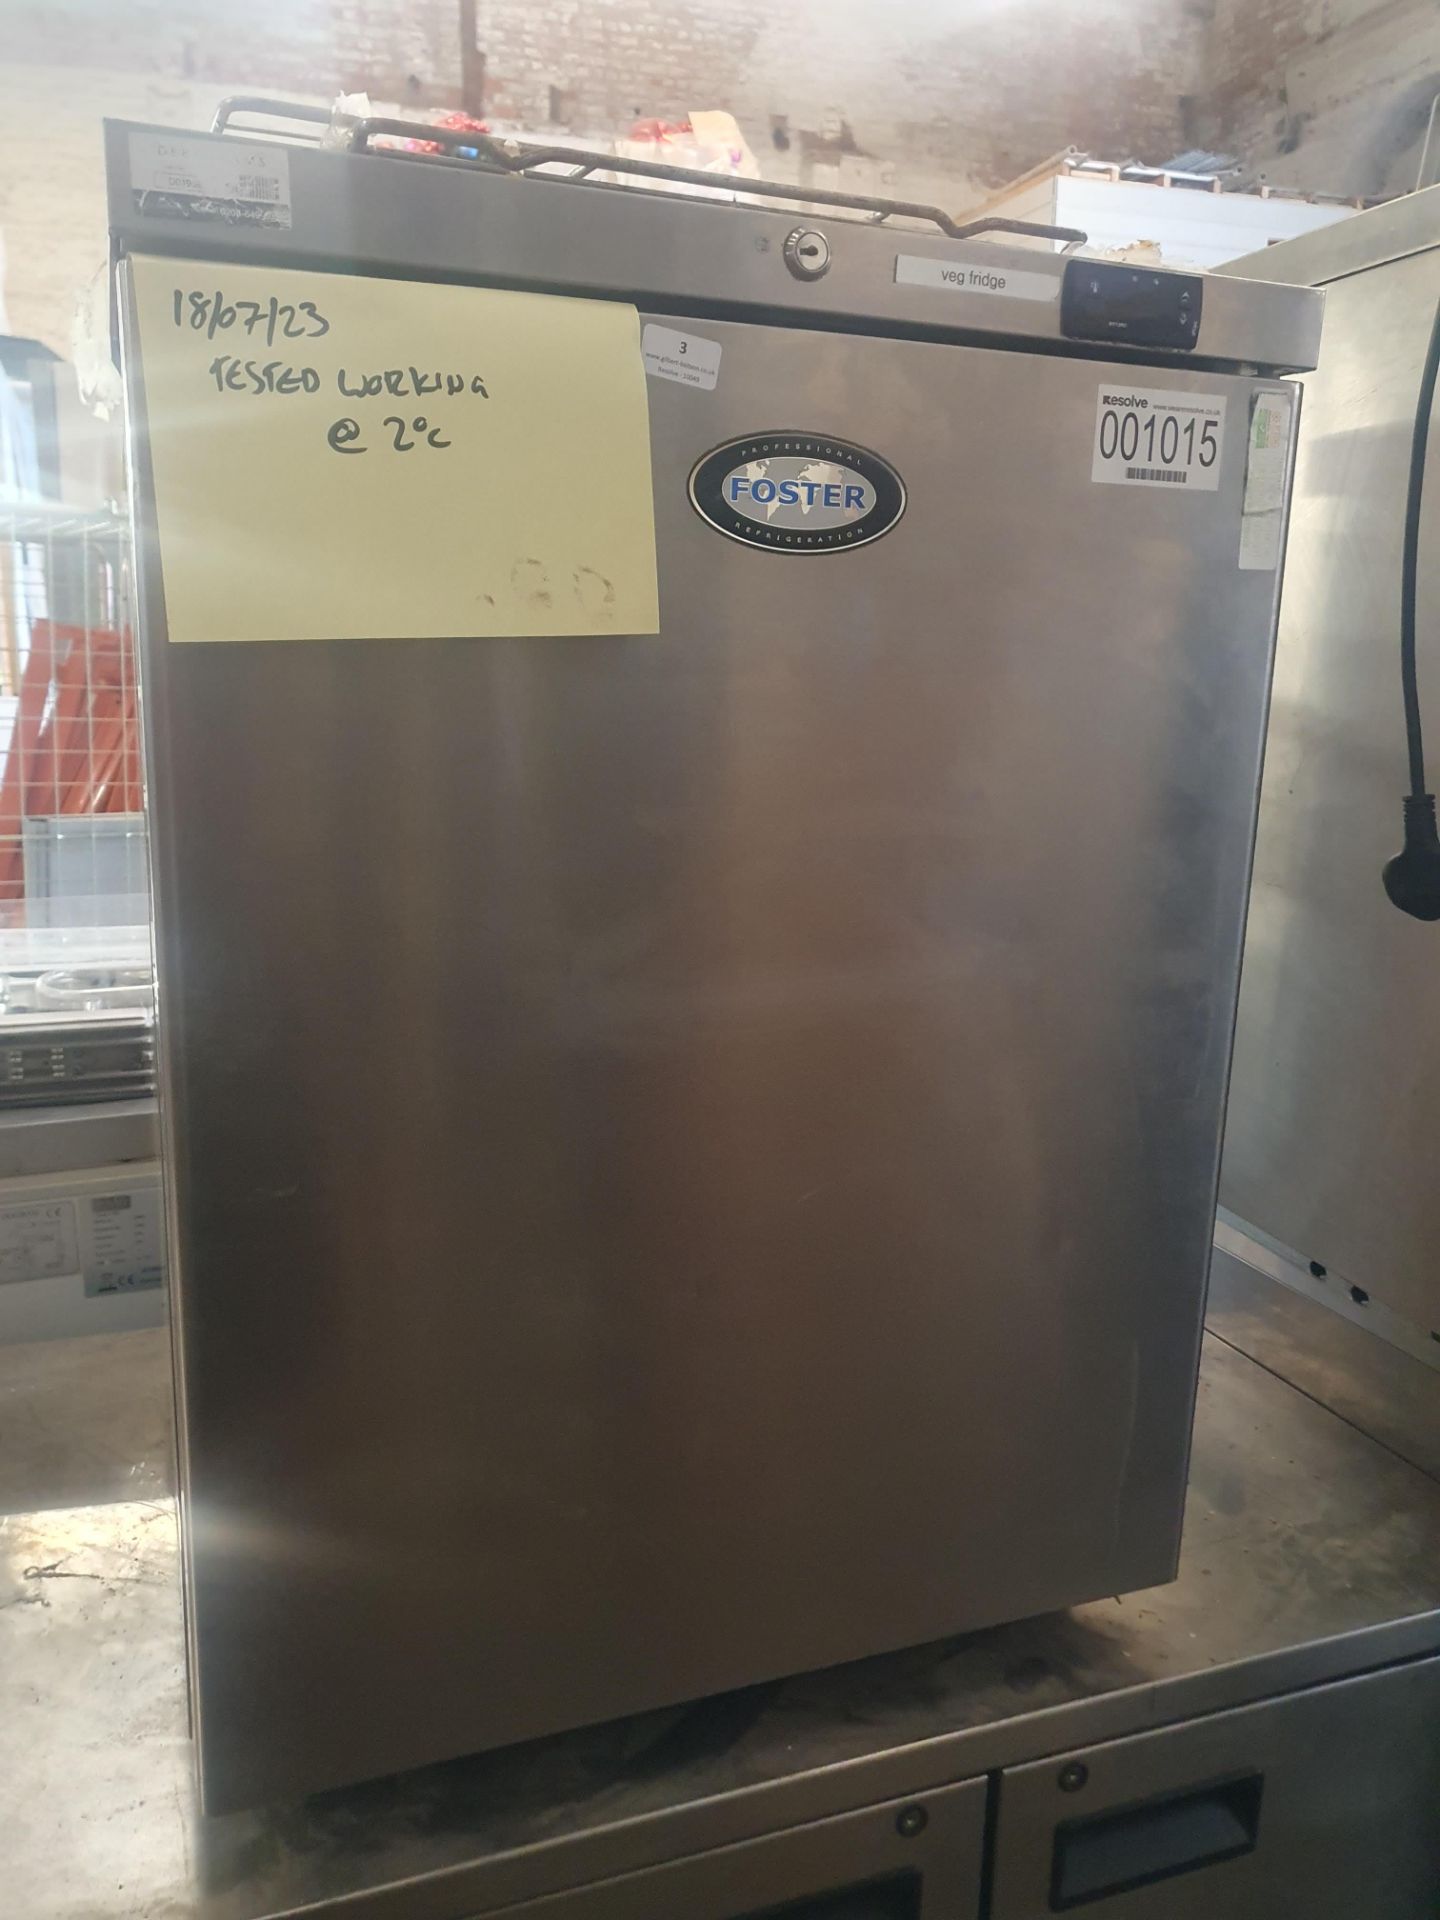 * Foster HR150 undercounter fridge - tested working